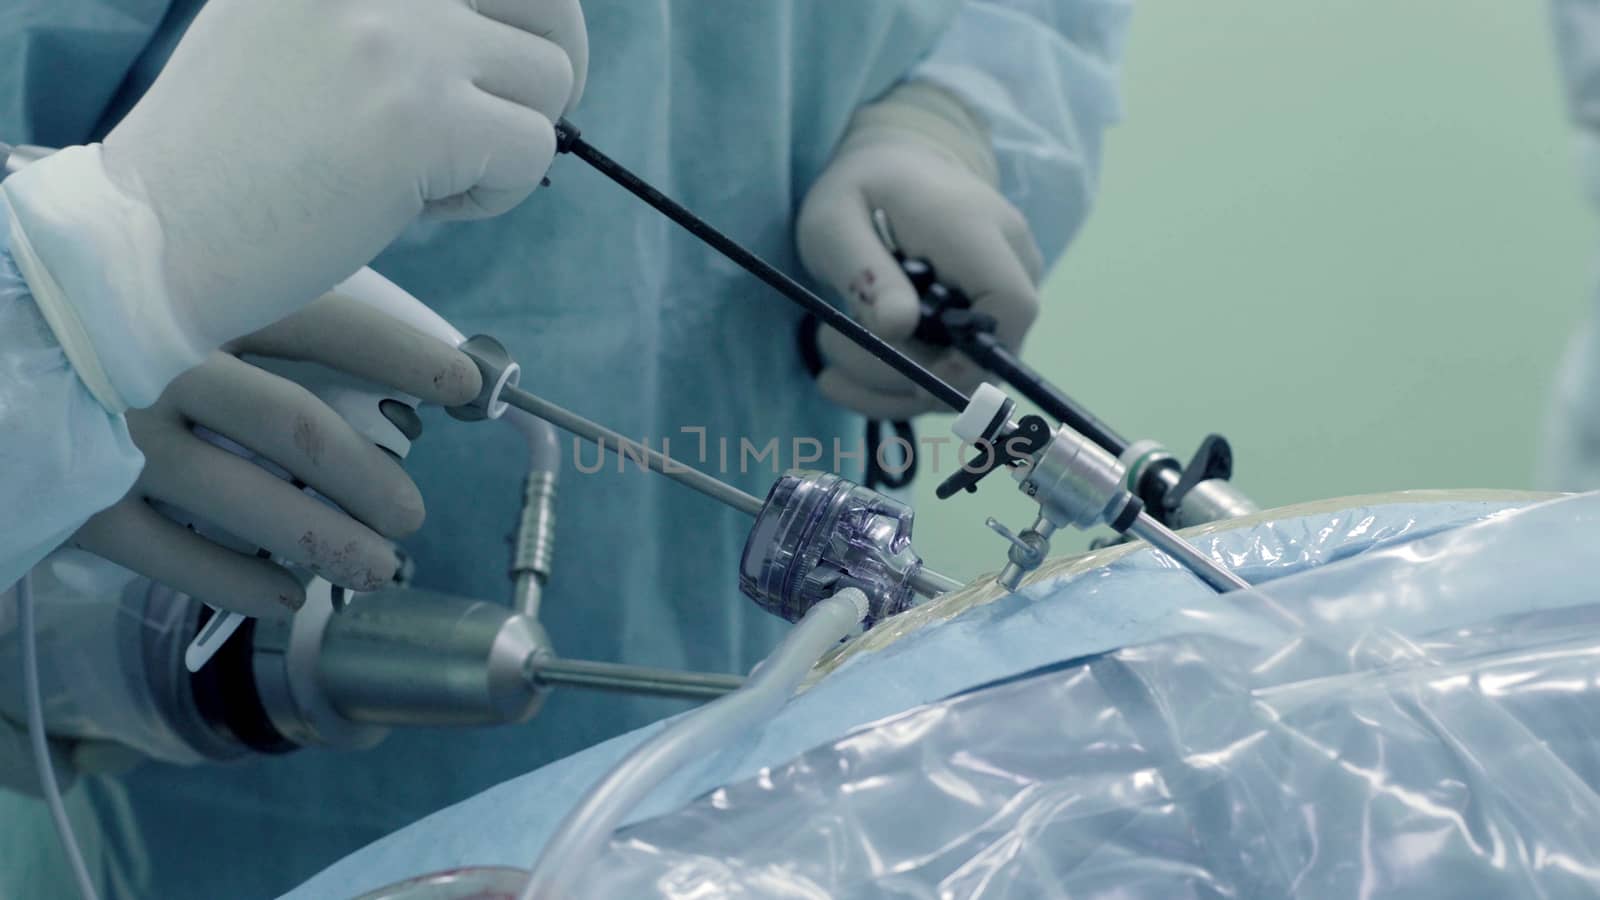 Laparoscopic surgery of the abdomen. The team of medical specialists conducting laparoscopic surgery.